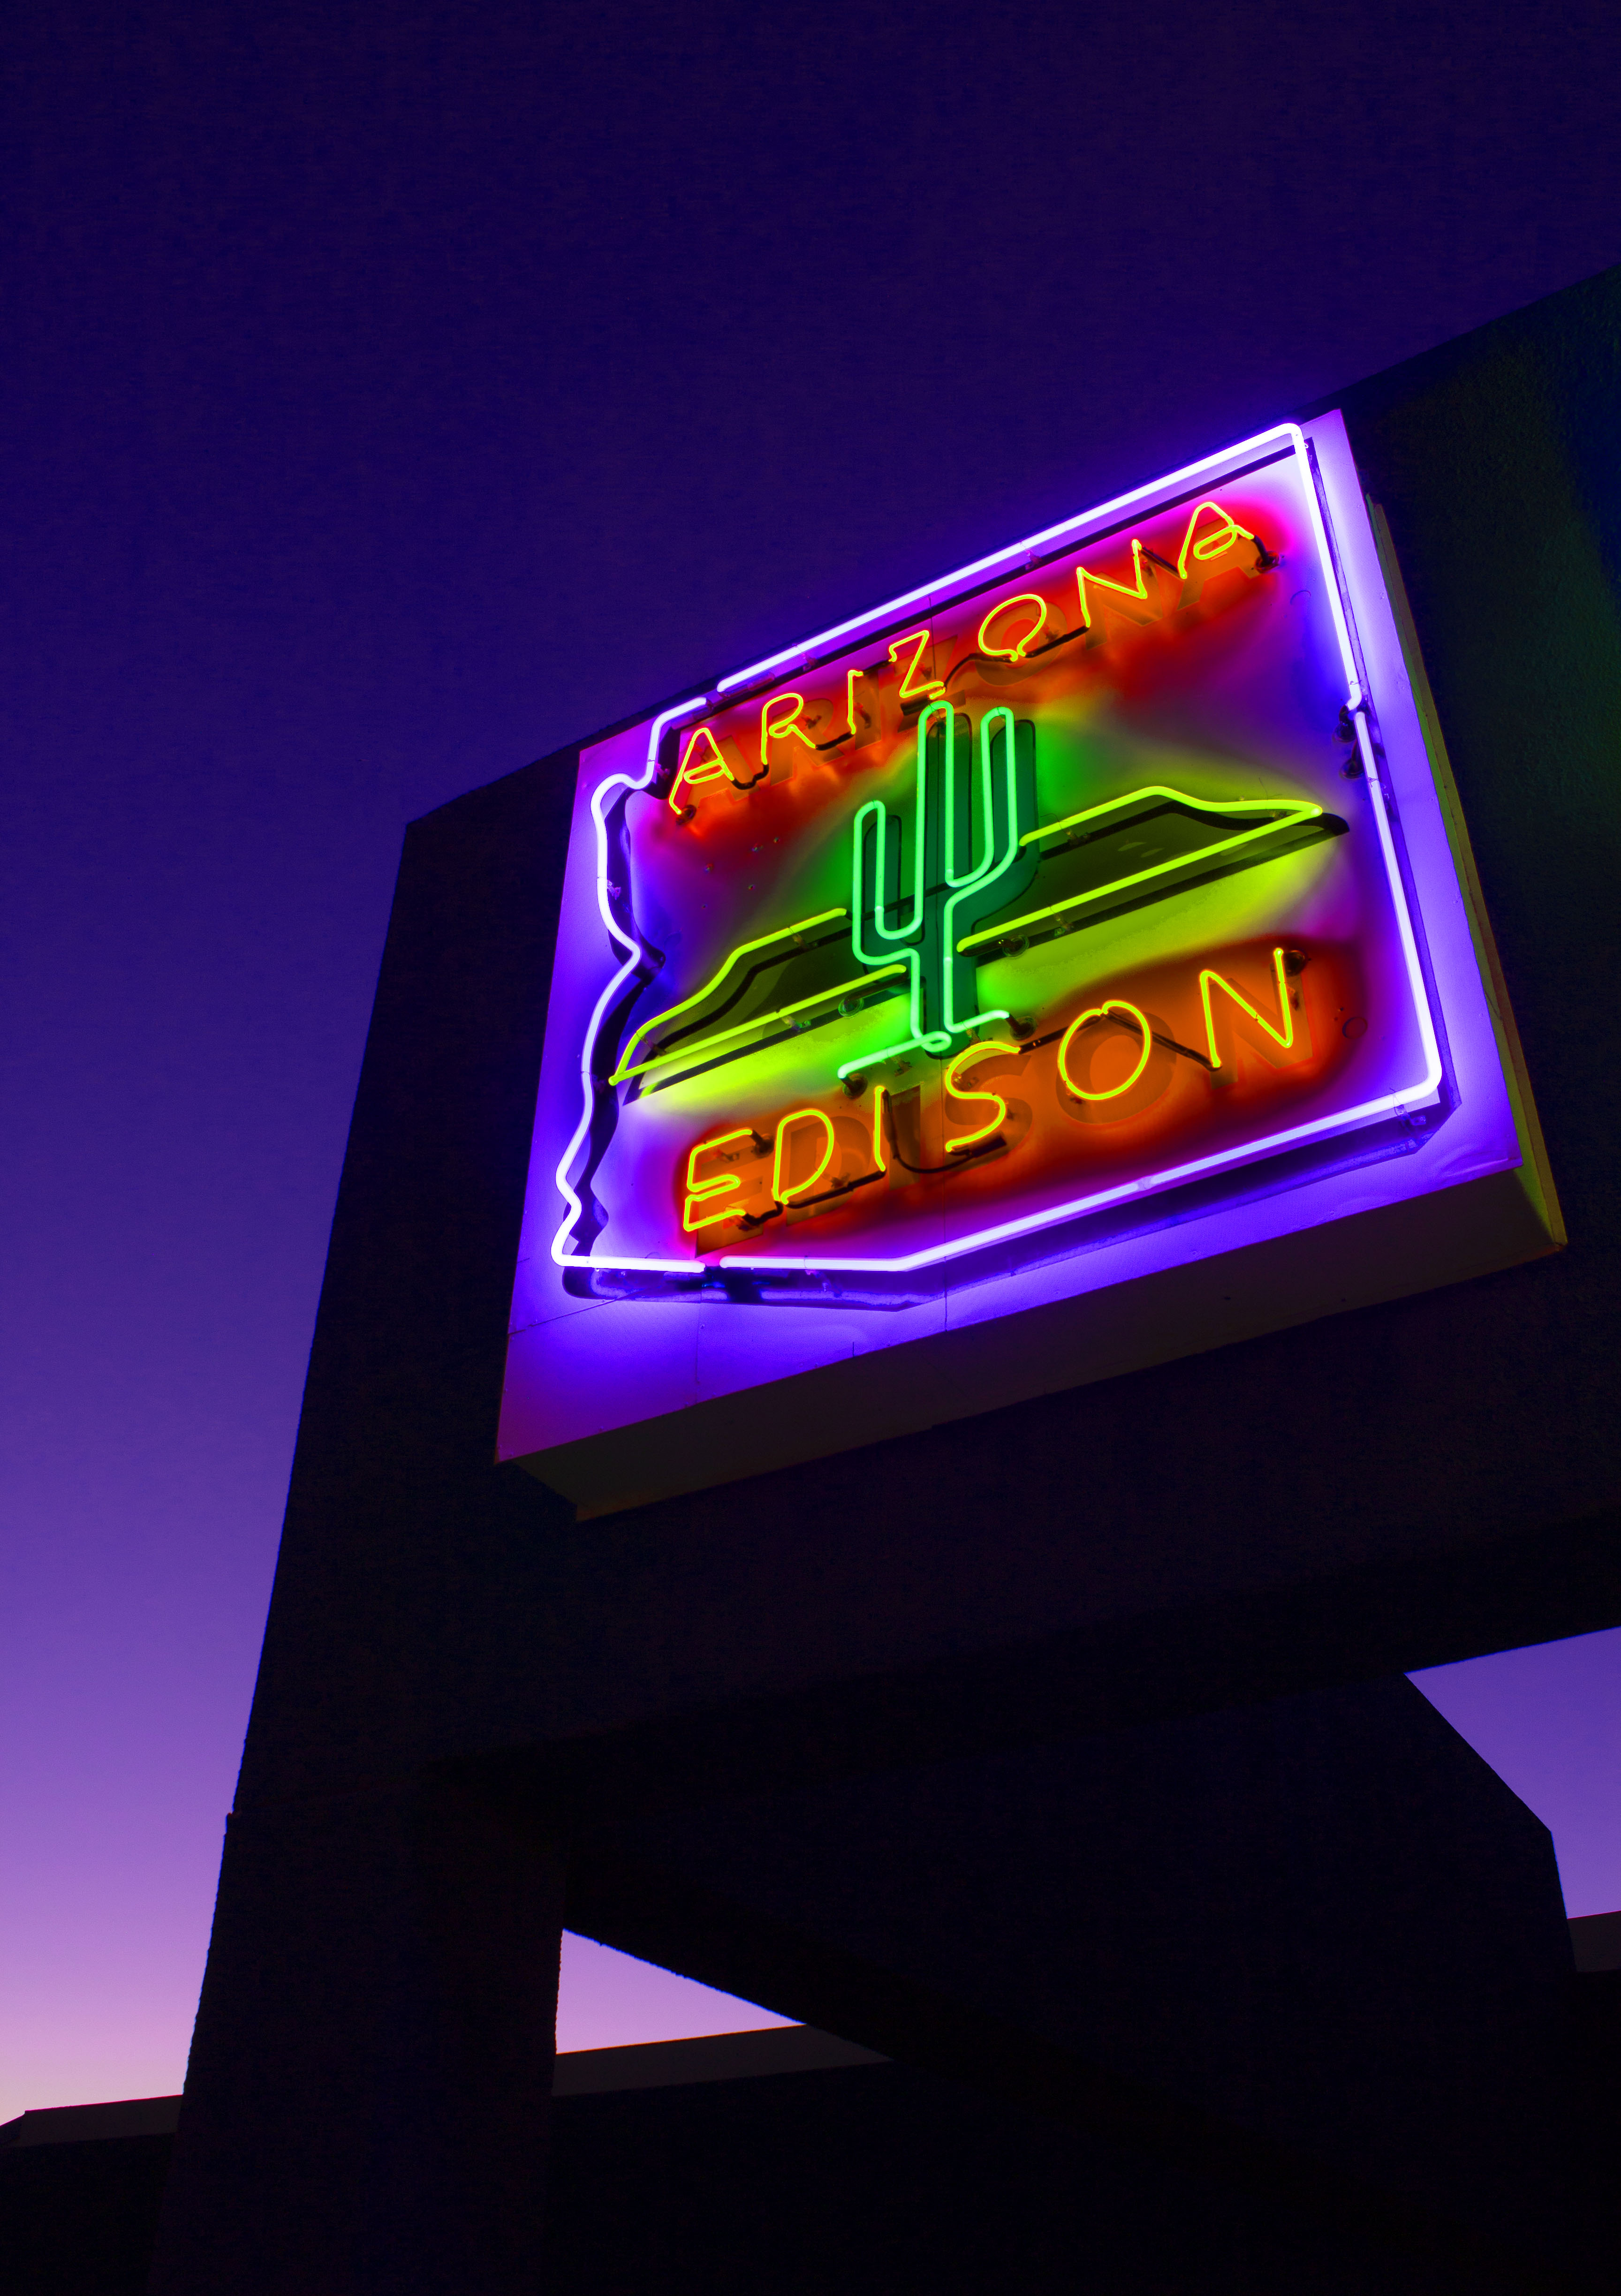 Digital photograph of a neon sign that says "Arizona Edison."